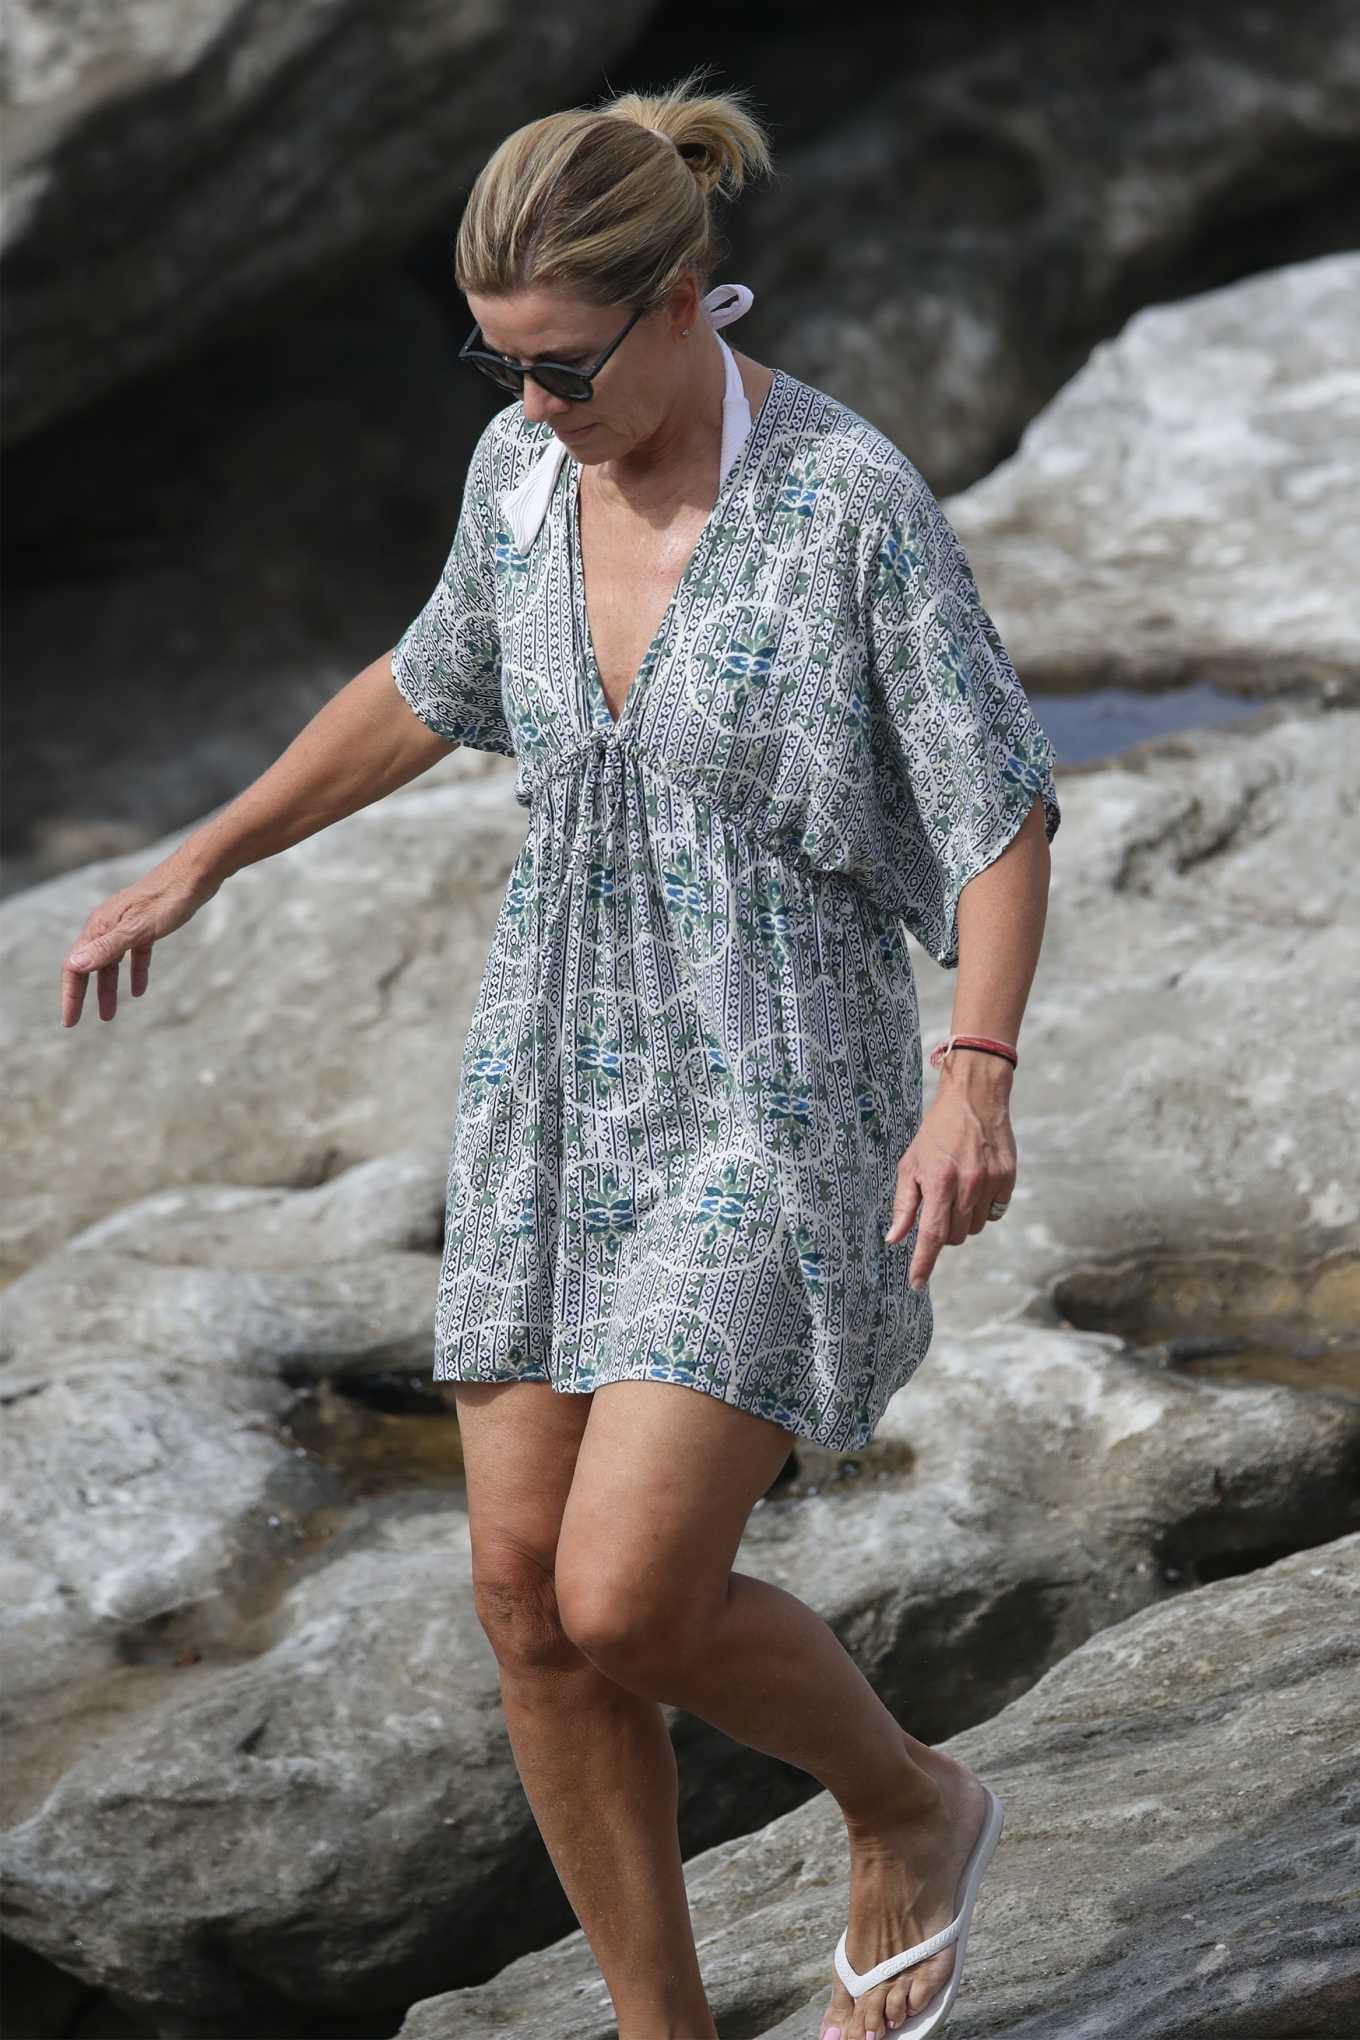 Deborah Hutton â€“ Swimsuit candids at a Sydney beach